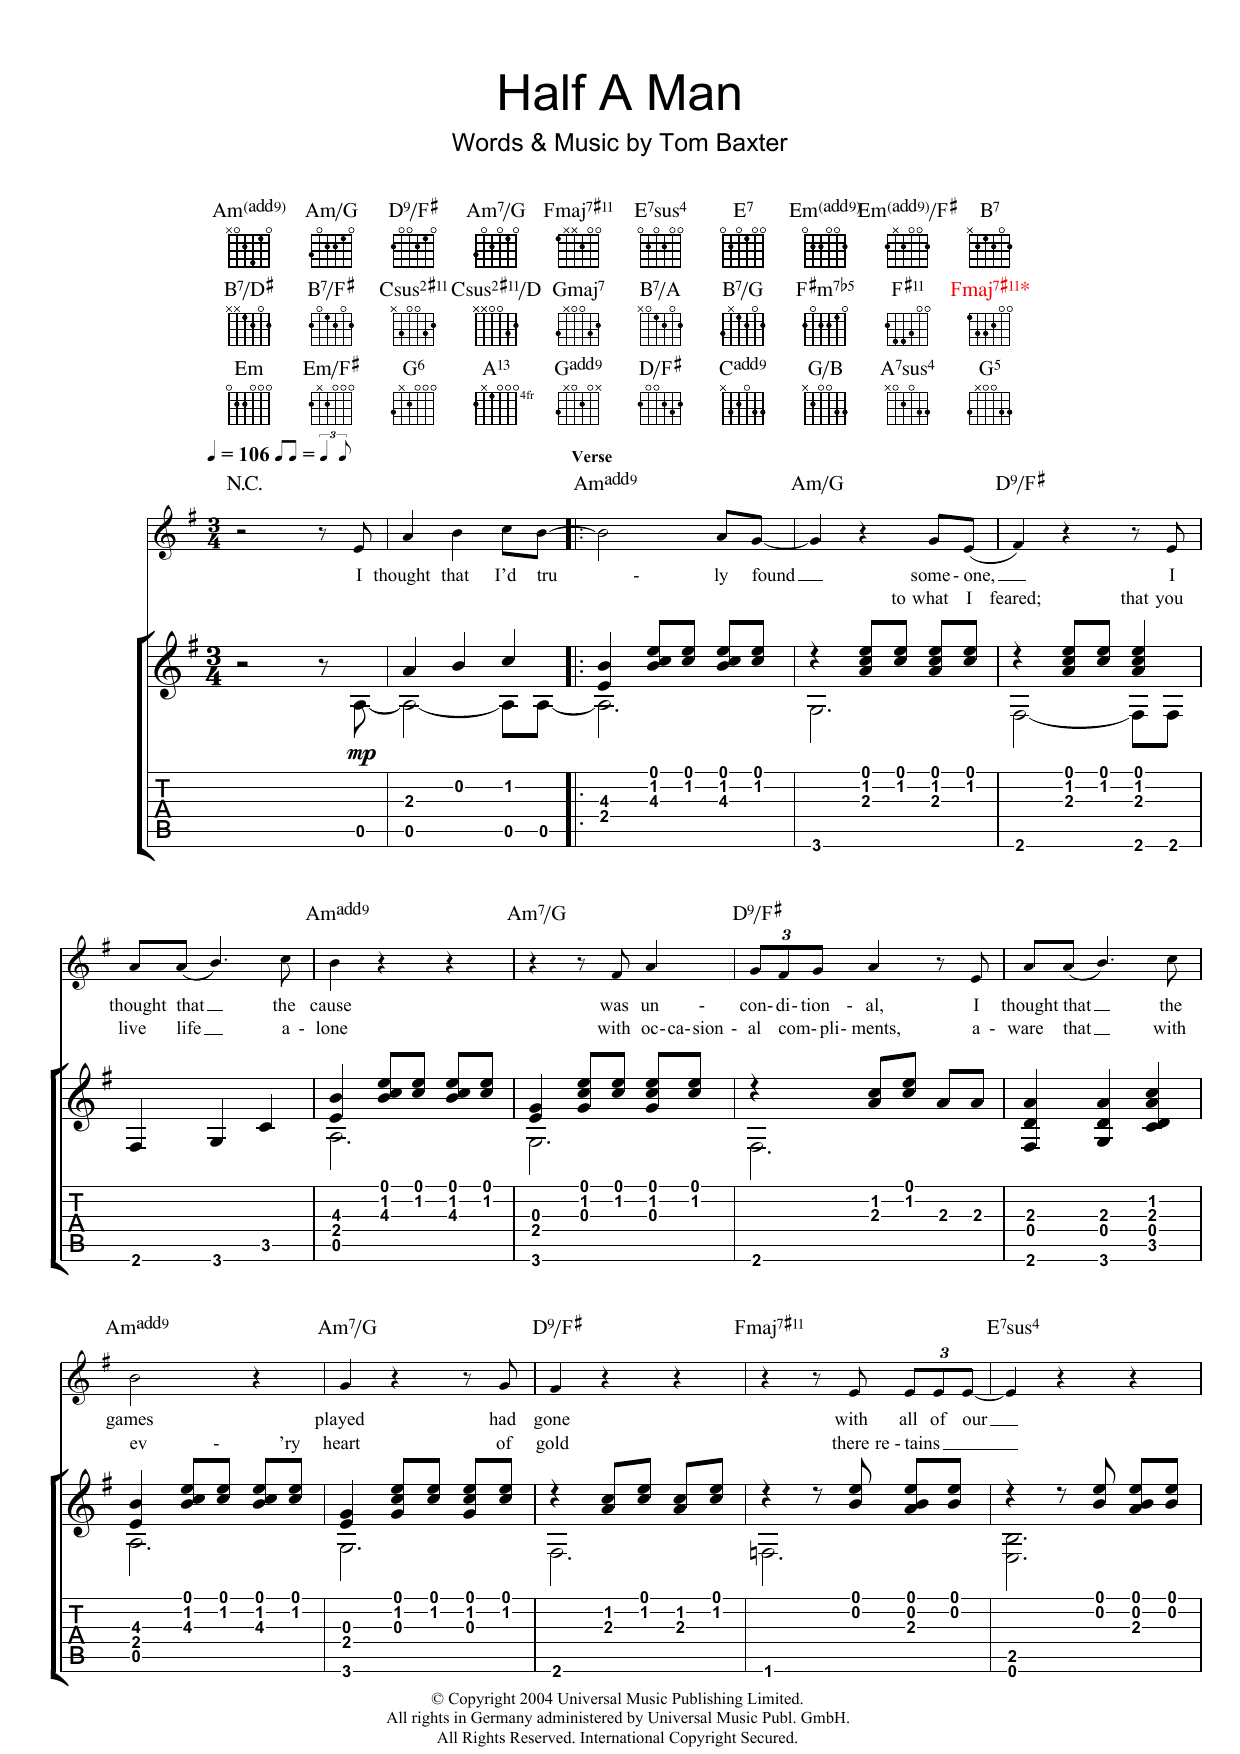 Tom Baxter Half A Man Sheet Music Notes & Chords for Guitar Tab - Download or Print PDF